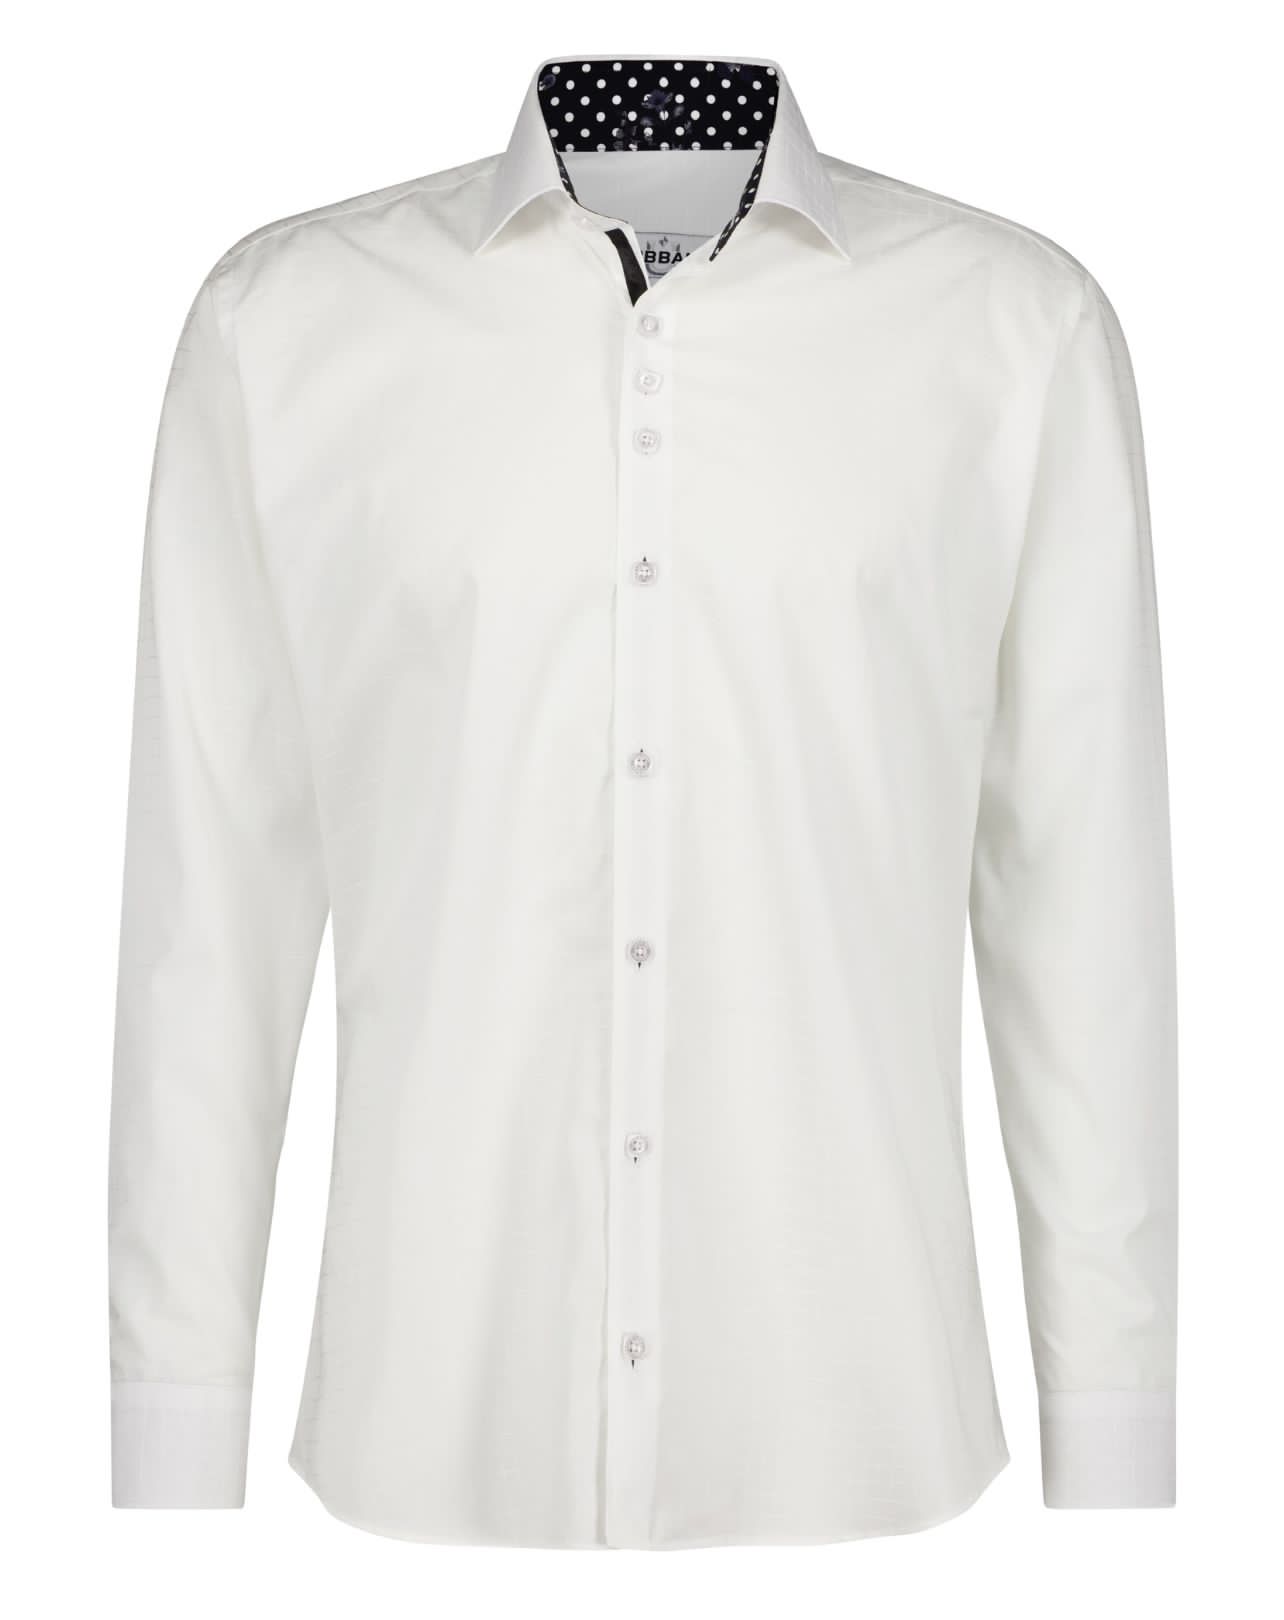 Croc Jacquard Shirt - White